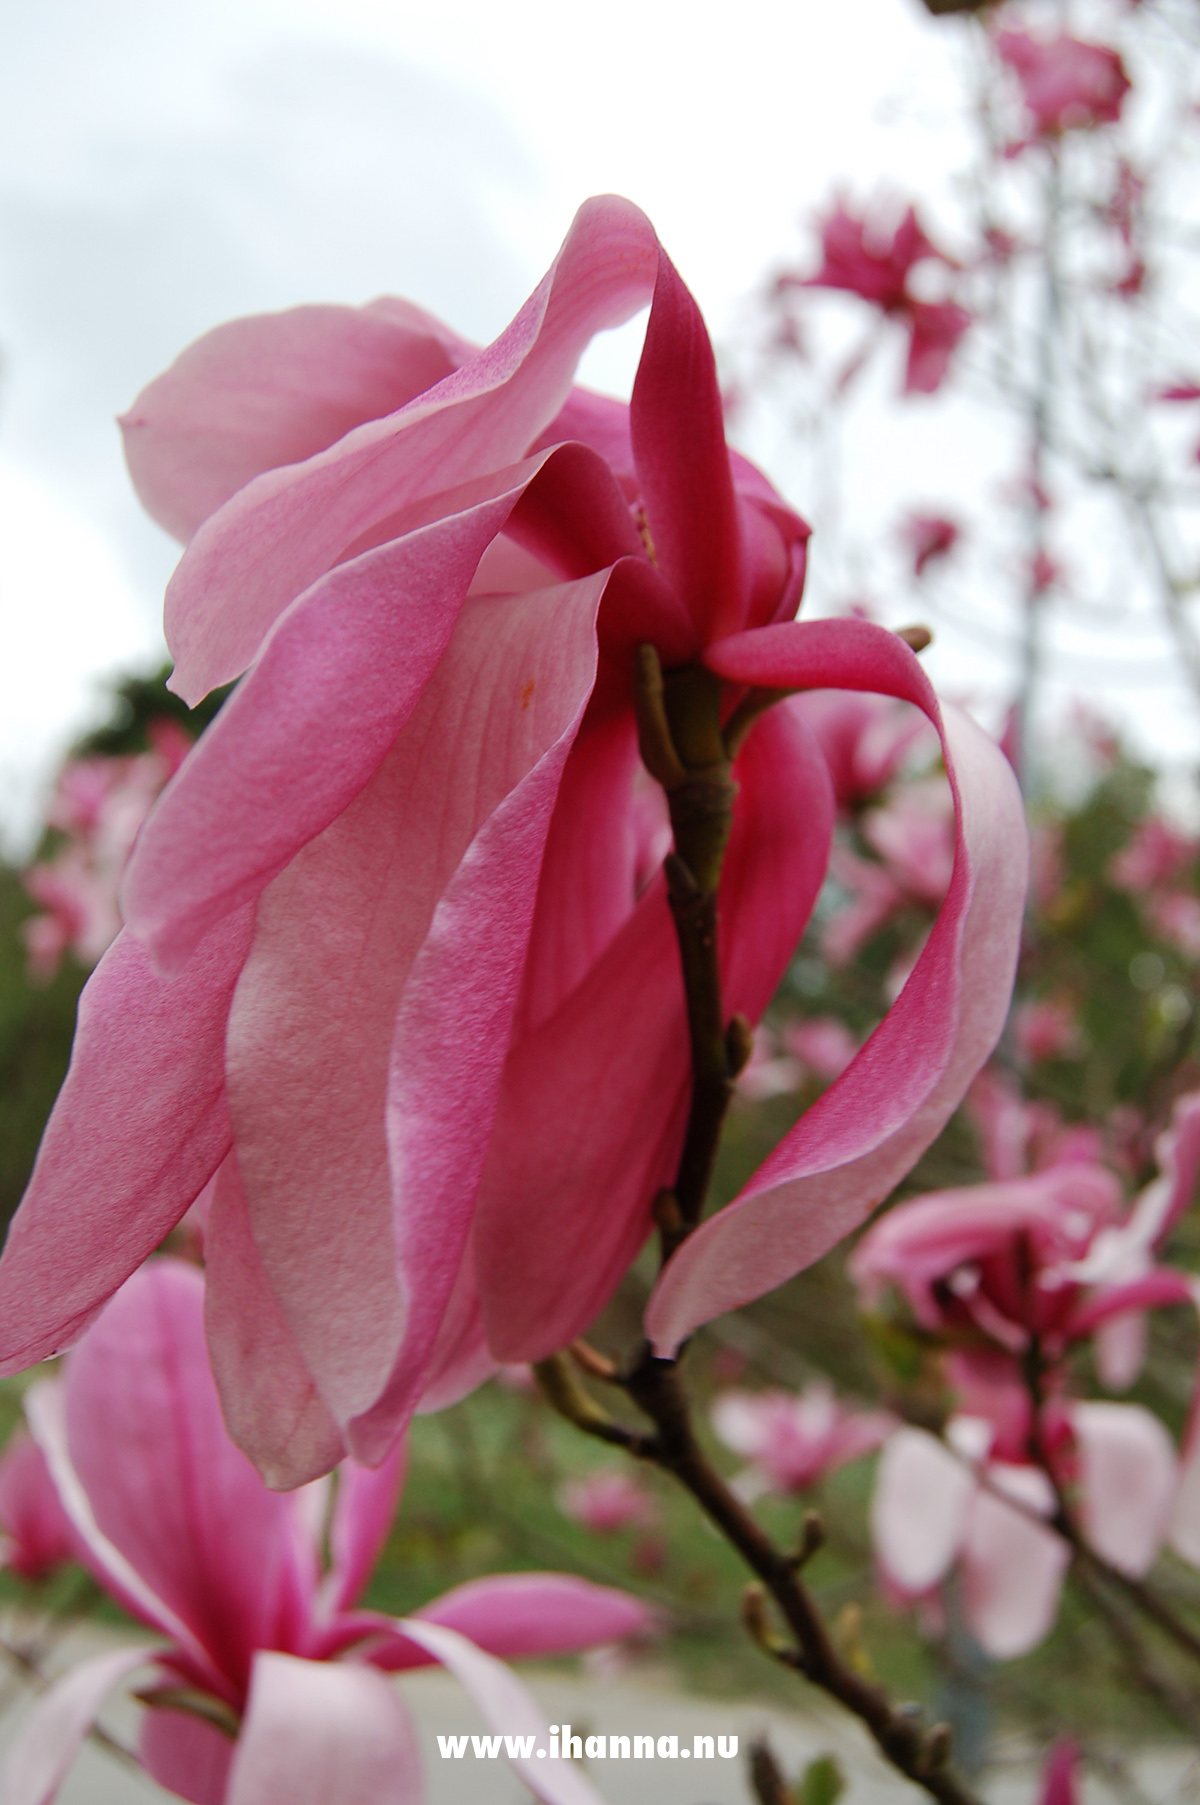 Big Magnolia flower in Sweden - photo copyright Hanna Andersson